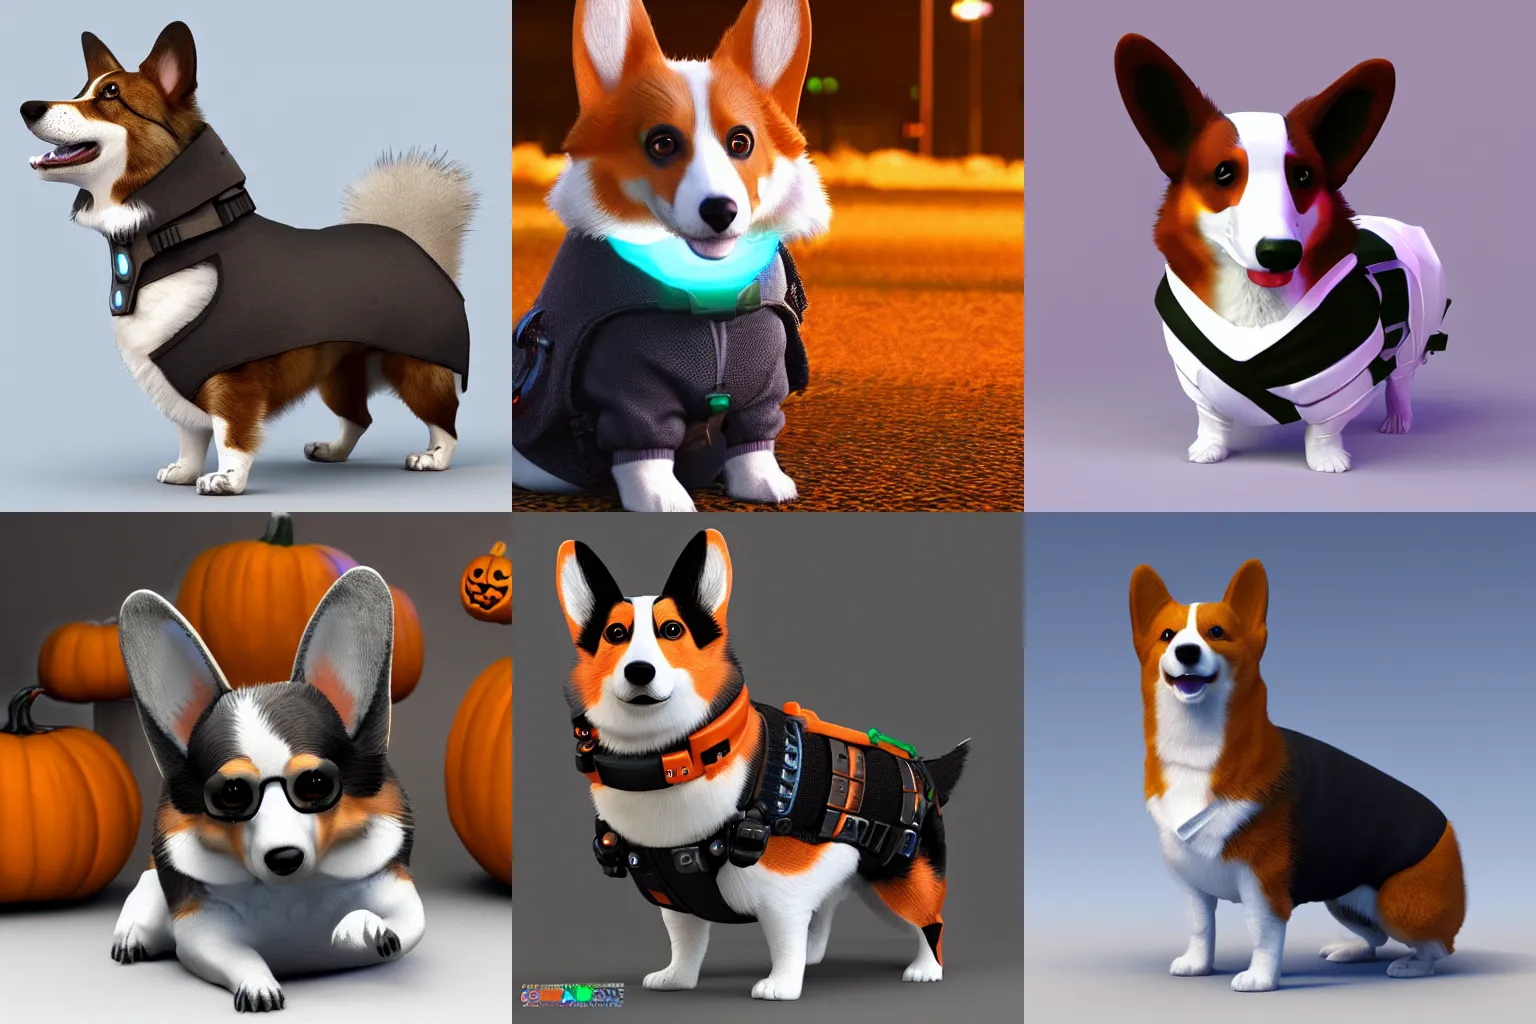 Simulation Dogs Welsh Corgi Pembroke Resin Models Desktop Ornament